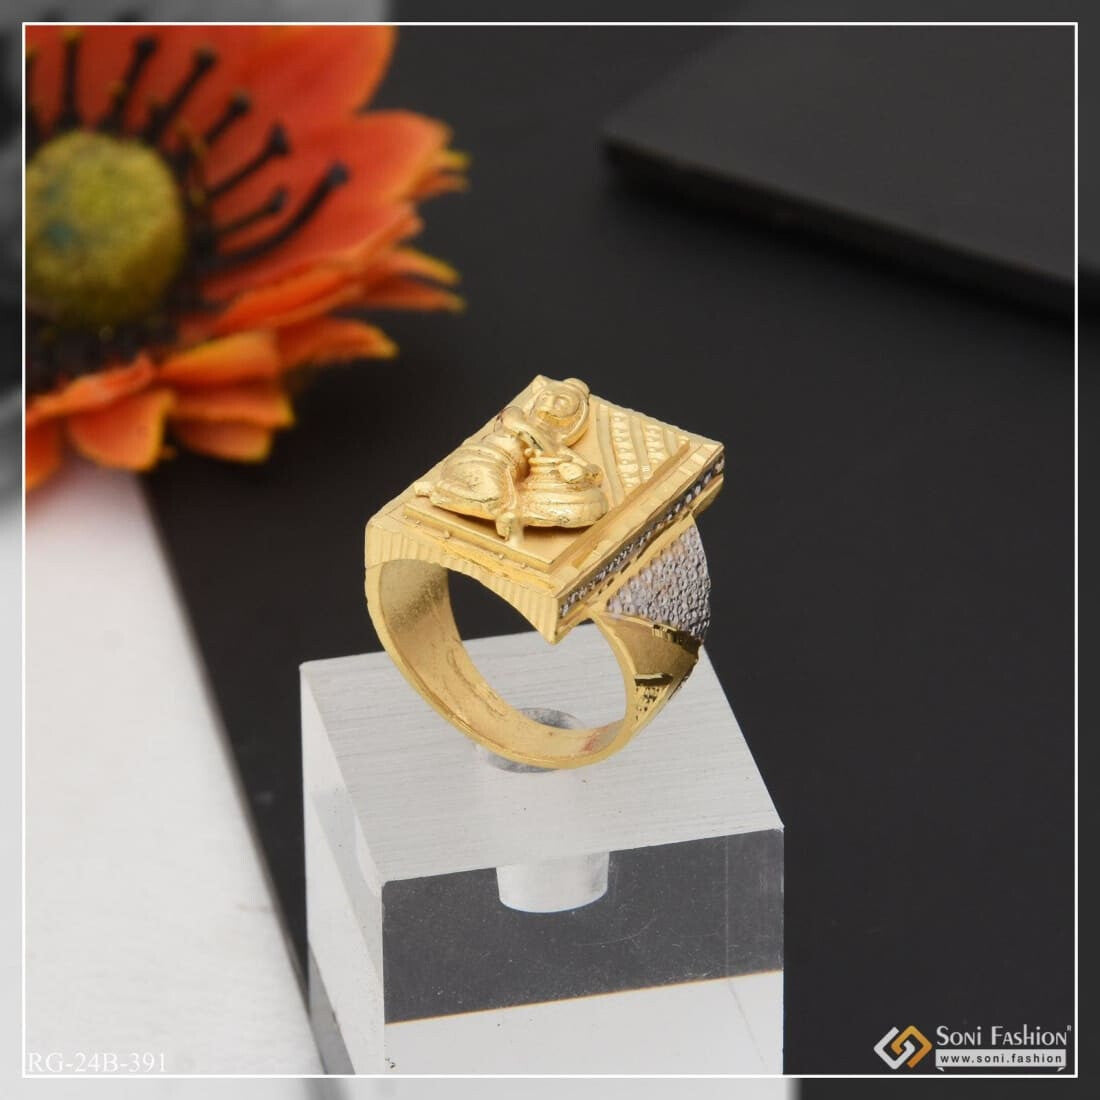 Krishna - 18K Gold Plated Large Open Heart Statement Trendy Minimalist Ring  | eBay